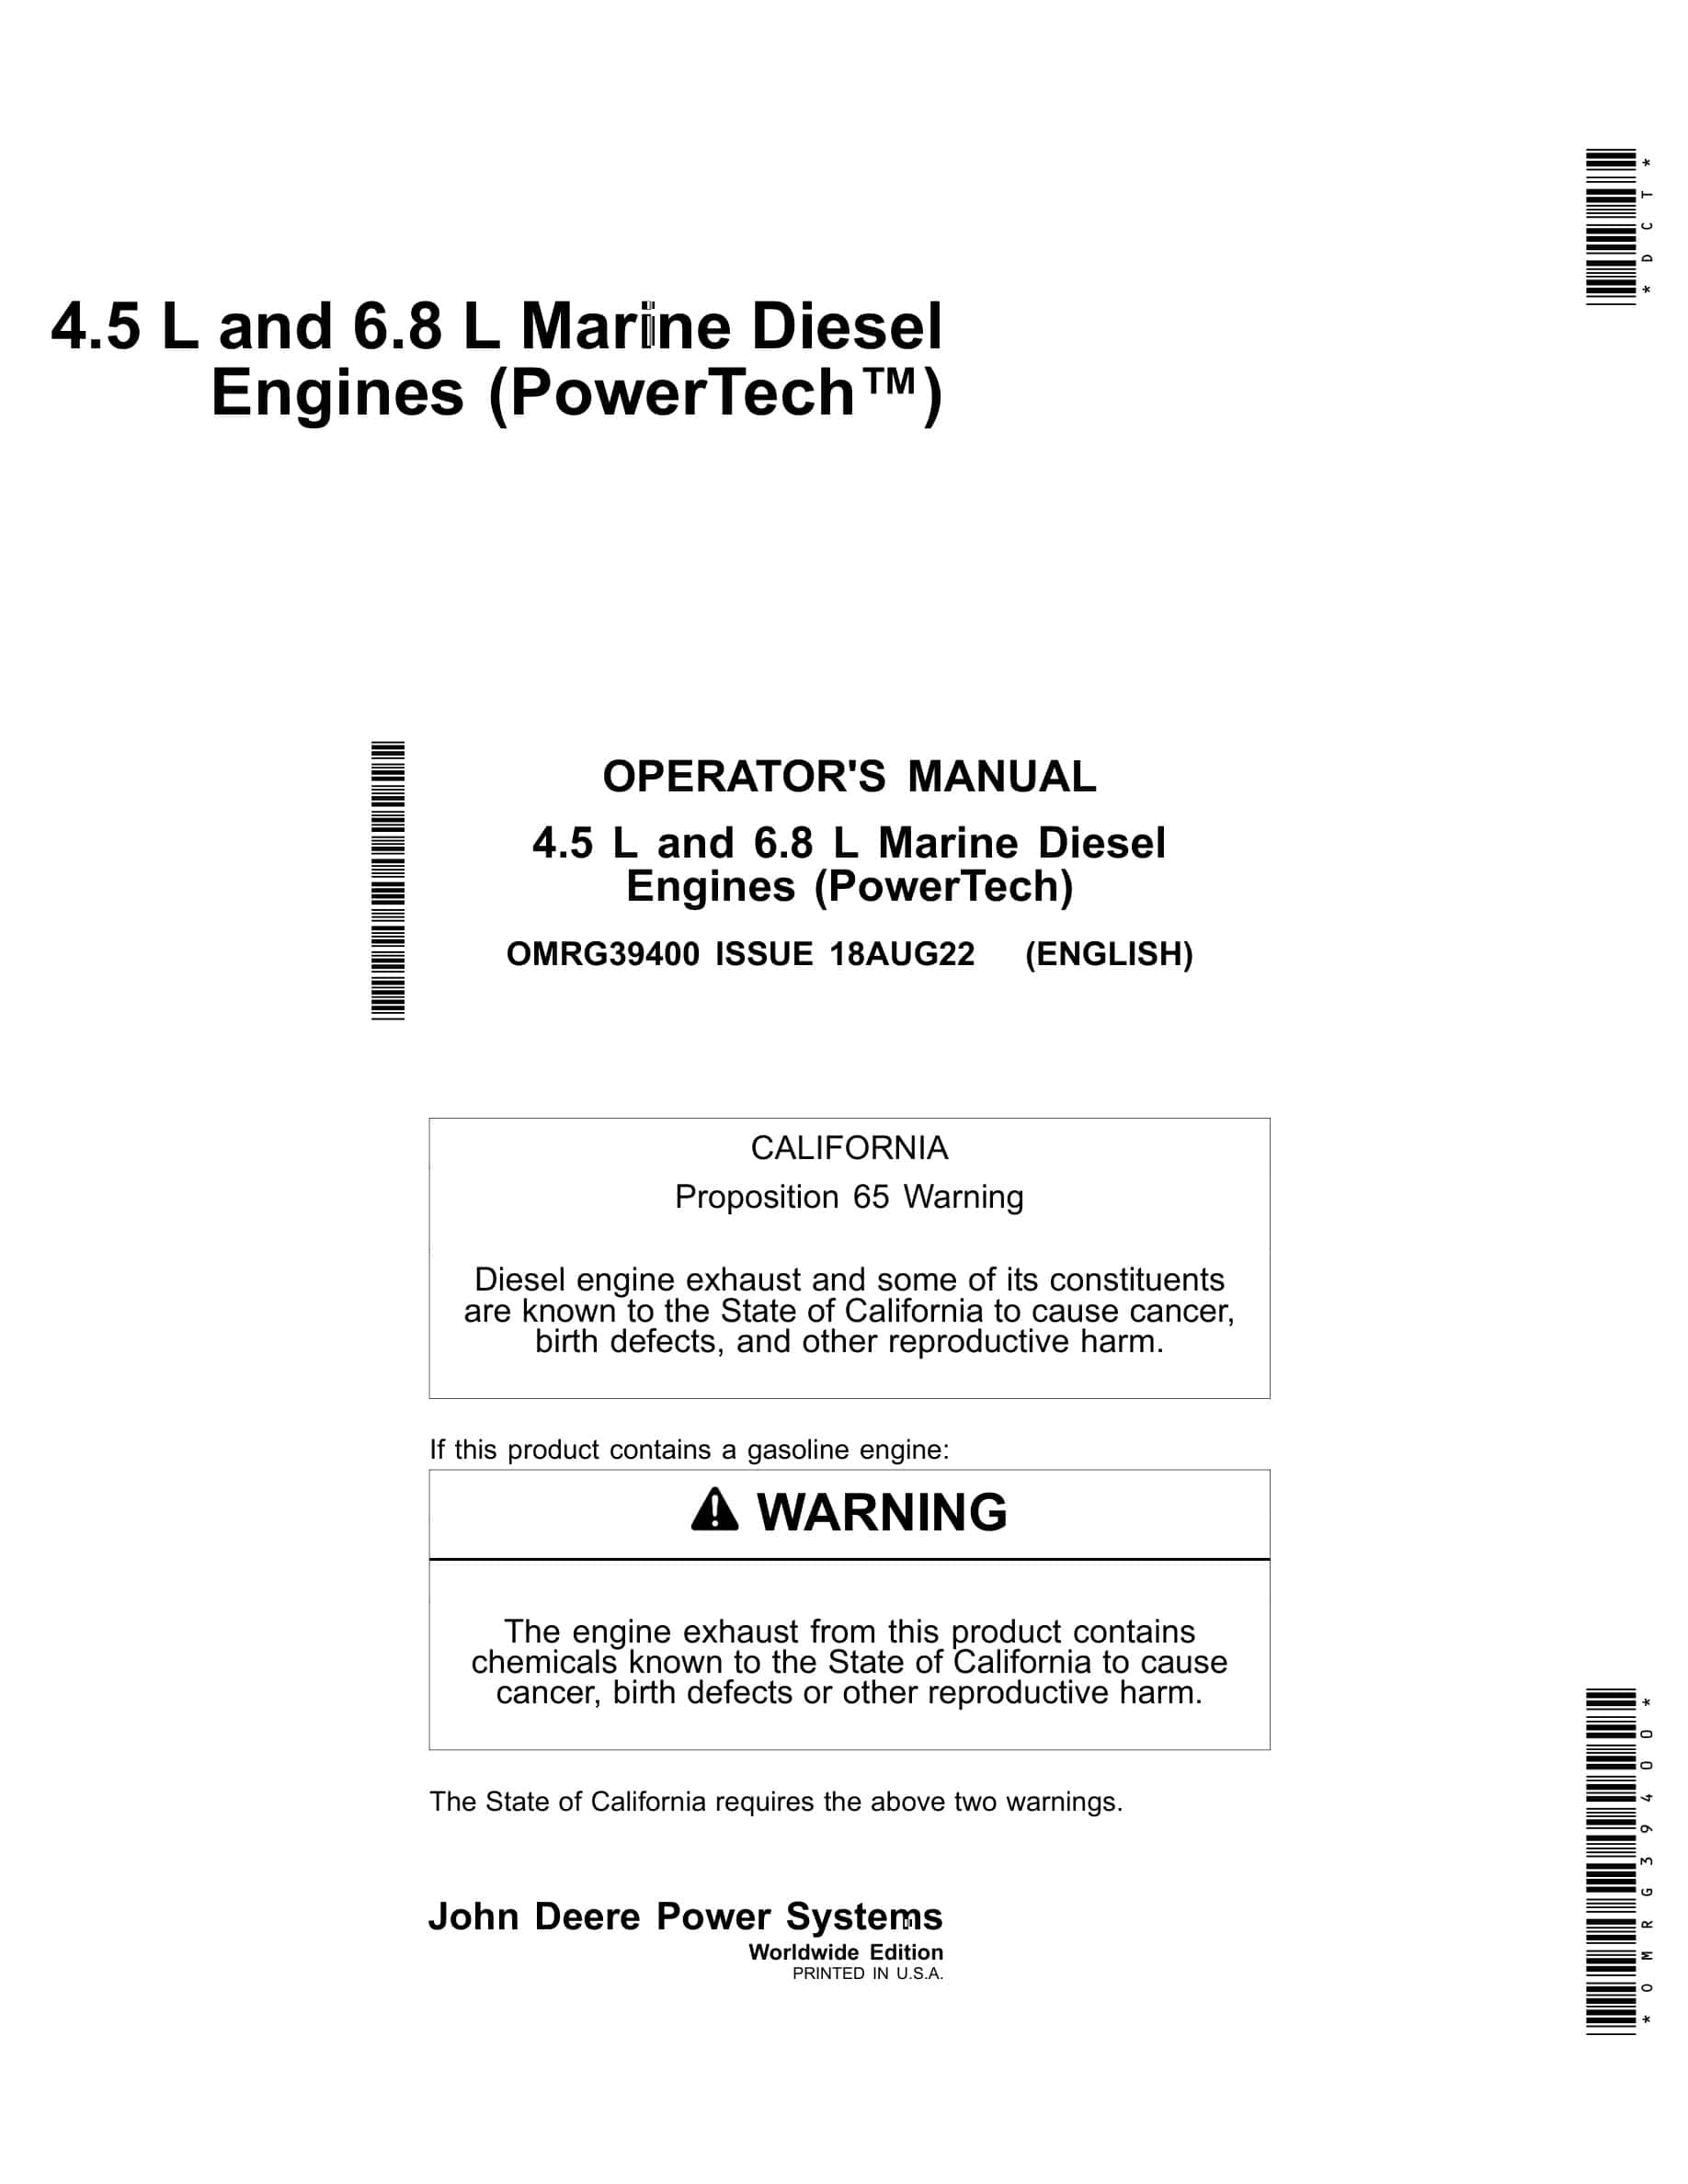 John Deere PowerTech 4.5 L and 6.8 L Marine Diesel Engines Operator Manual OMRG39400-1